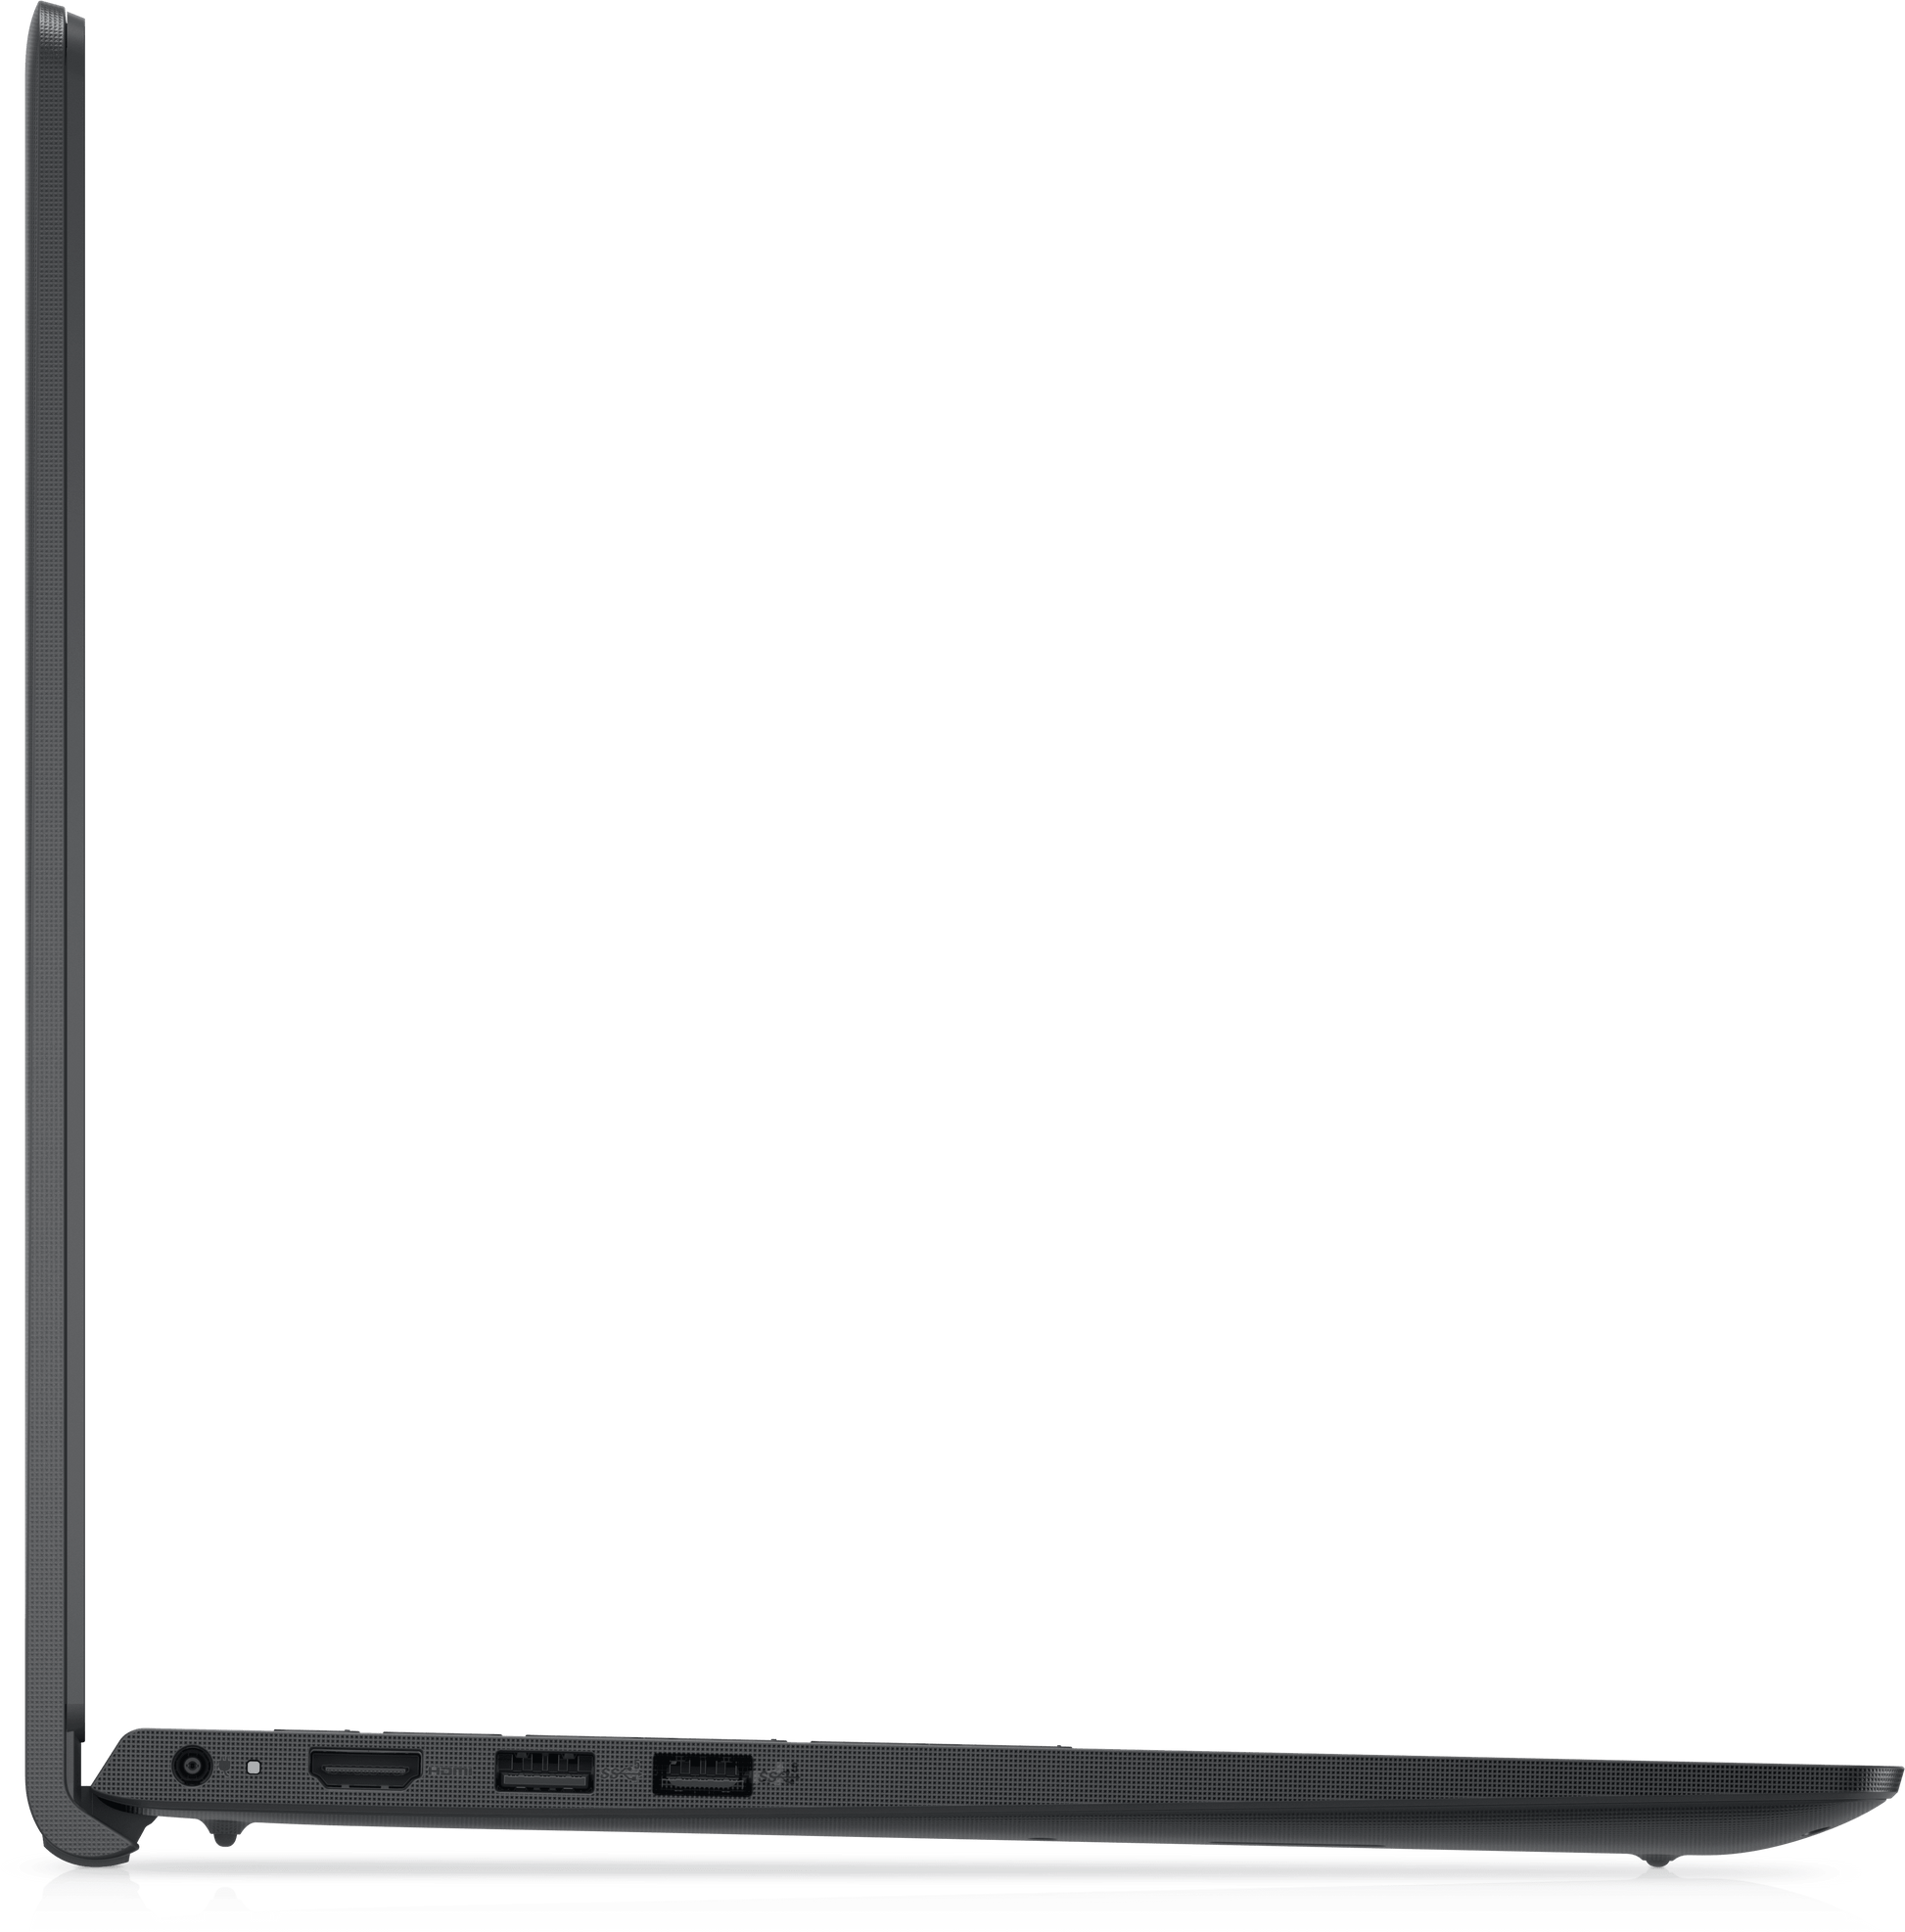 DELL Vostro 15 3510 Laptop - Intel Core i7-11th, 8GB, 512GB SSD, NVIDIA MX350 2GB, 15.6-Inch FHD, Dos - DELL Vostro 15 3510 Laptop - Intel Core i7-11th, 8GB, 512GB SSD, NVIDIA MX350 2GB, 15.6-Inch FHD, Dos - undefined Ennap.com